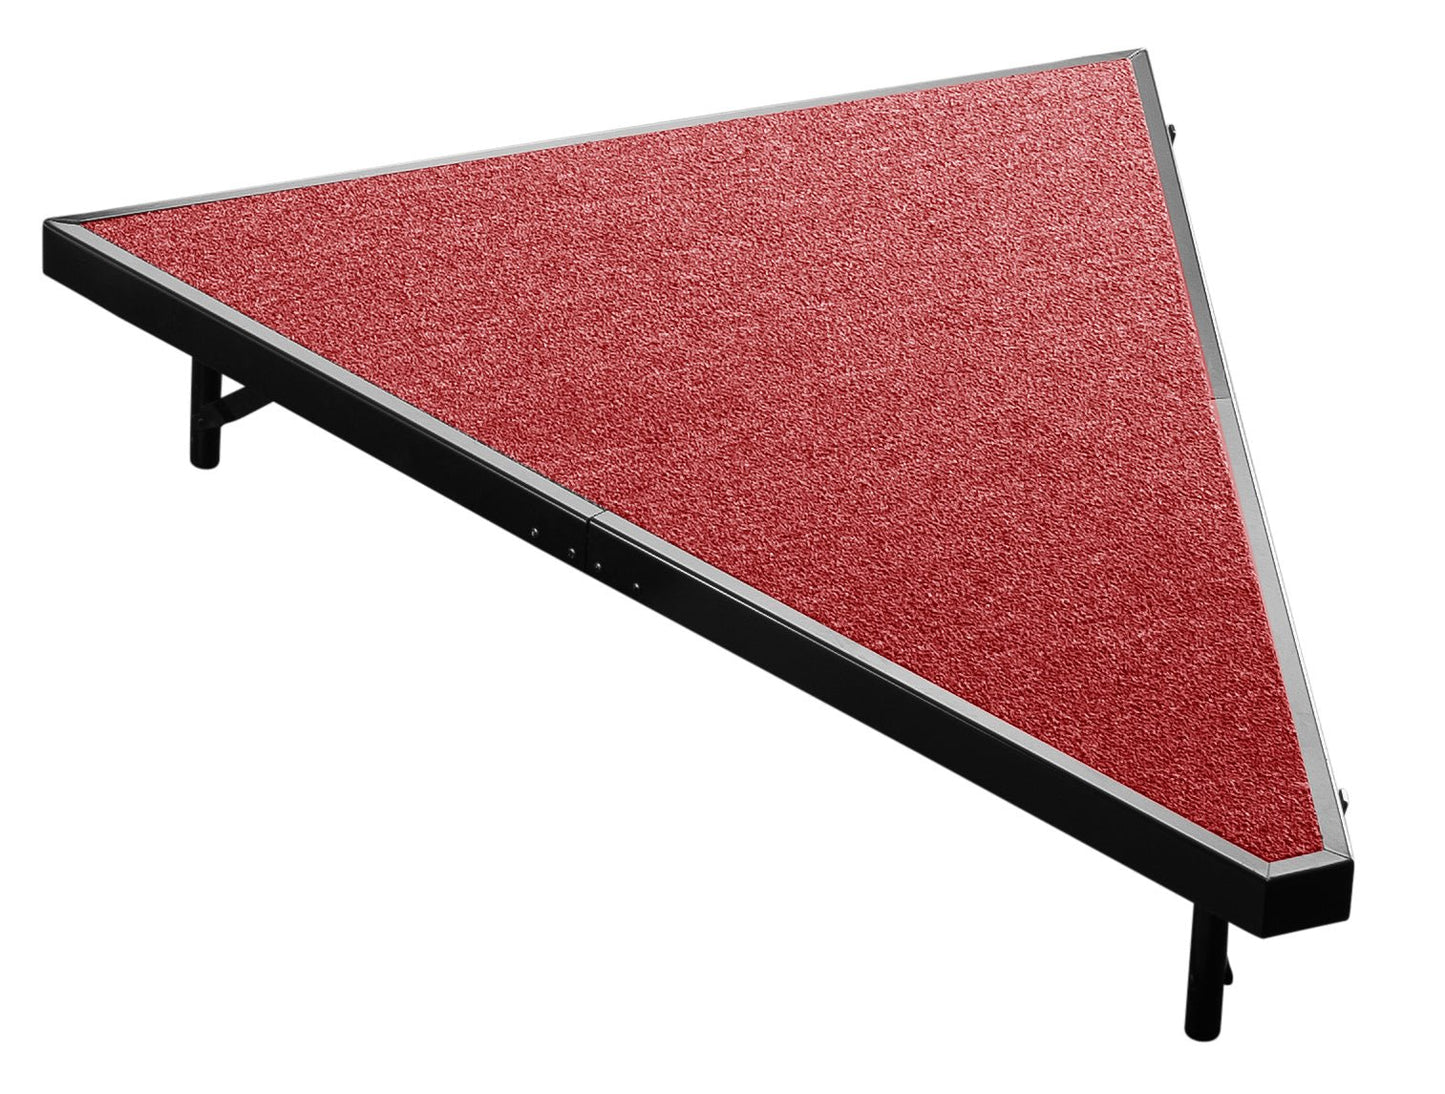 NPS Portable Stage Unit - Carpeted or Hardboard - SchoolOutlet